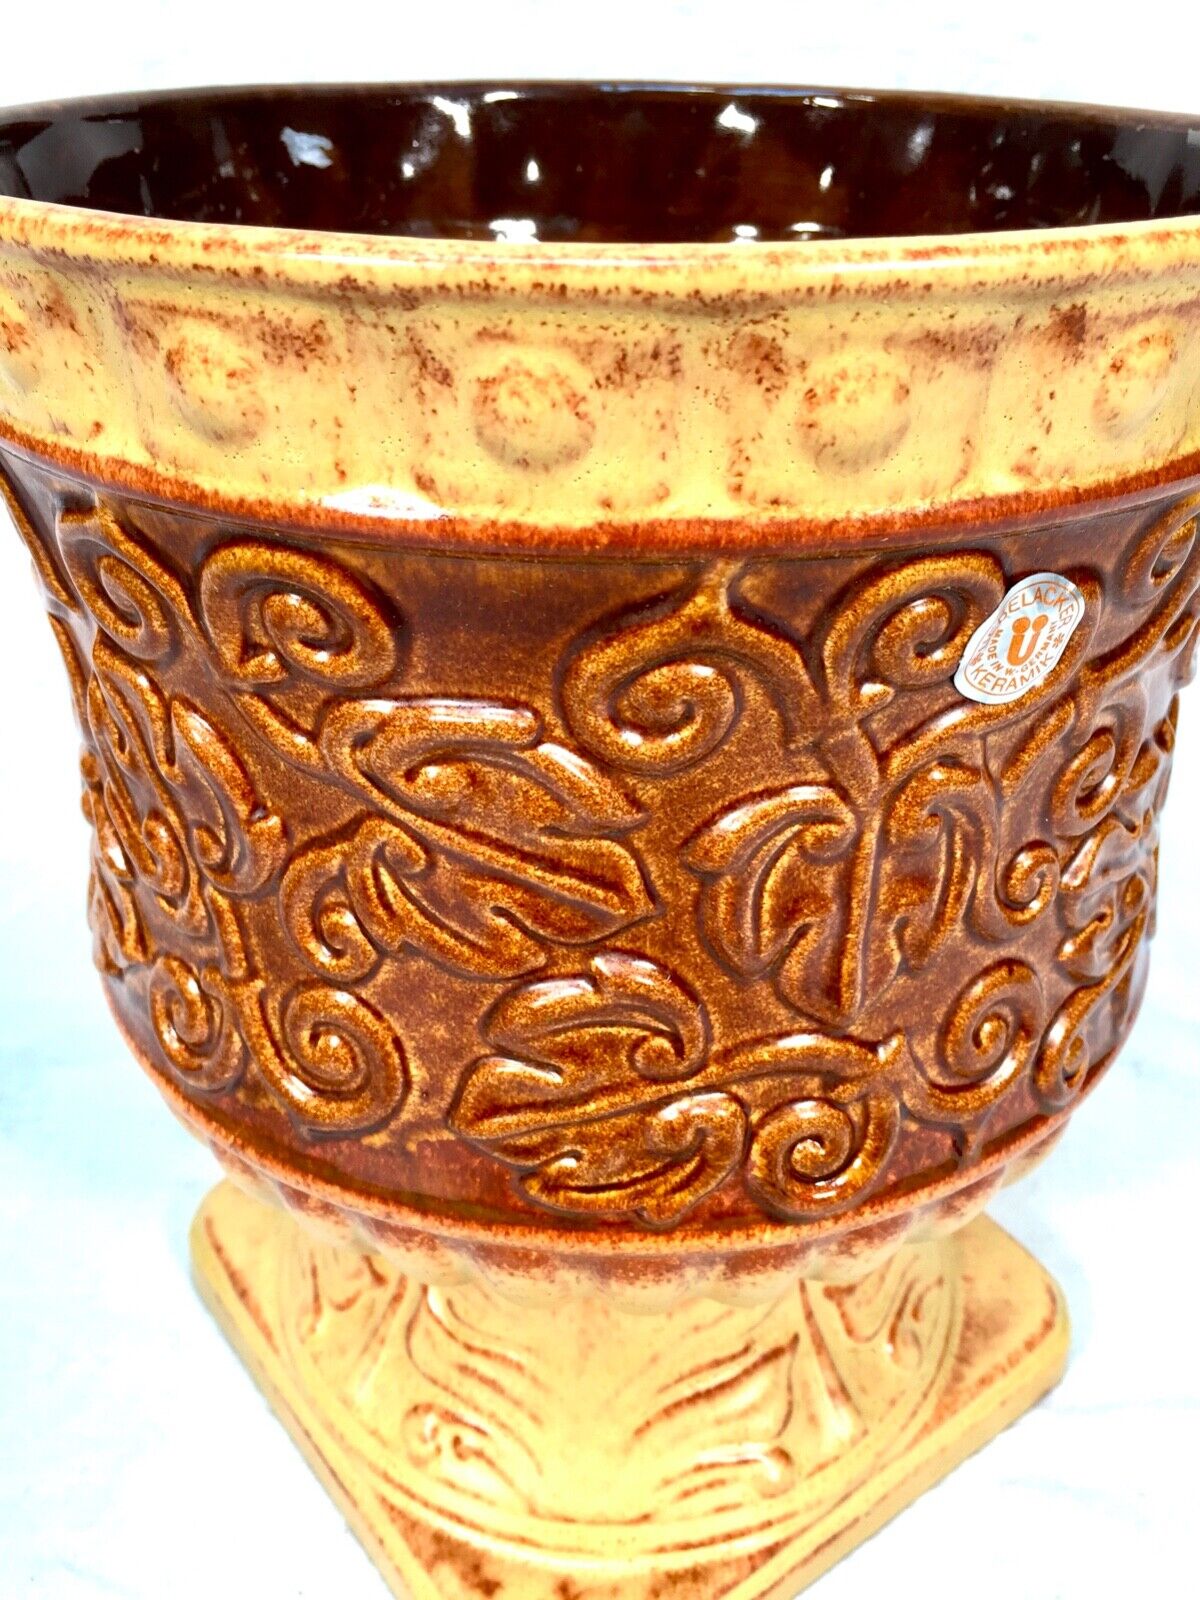 Vintage West German Pottery Planter / Urn / Vase in Original Box / Cream & Brown